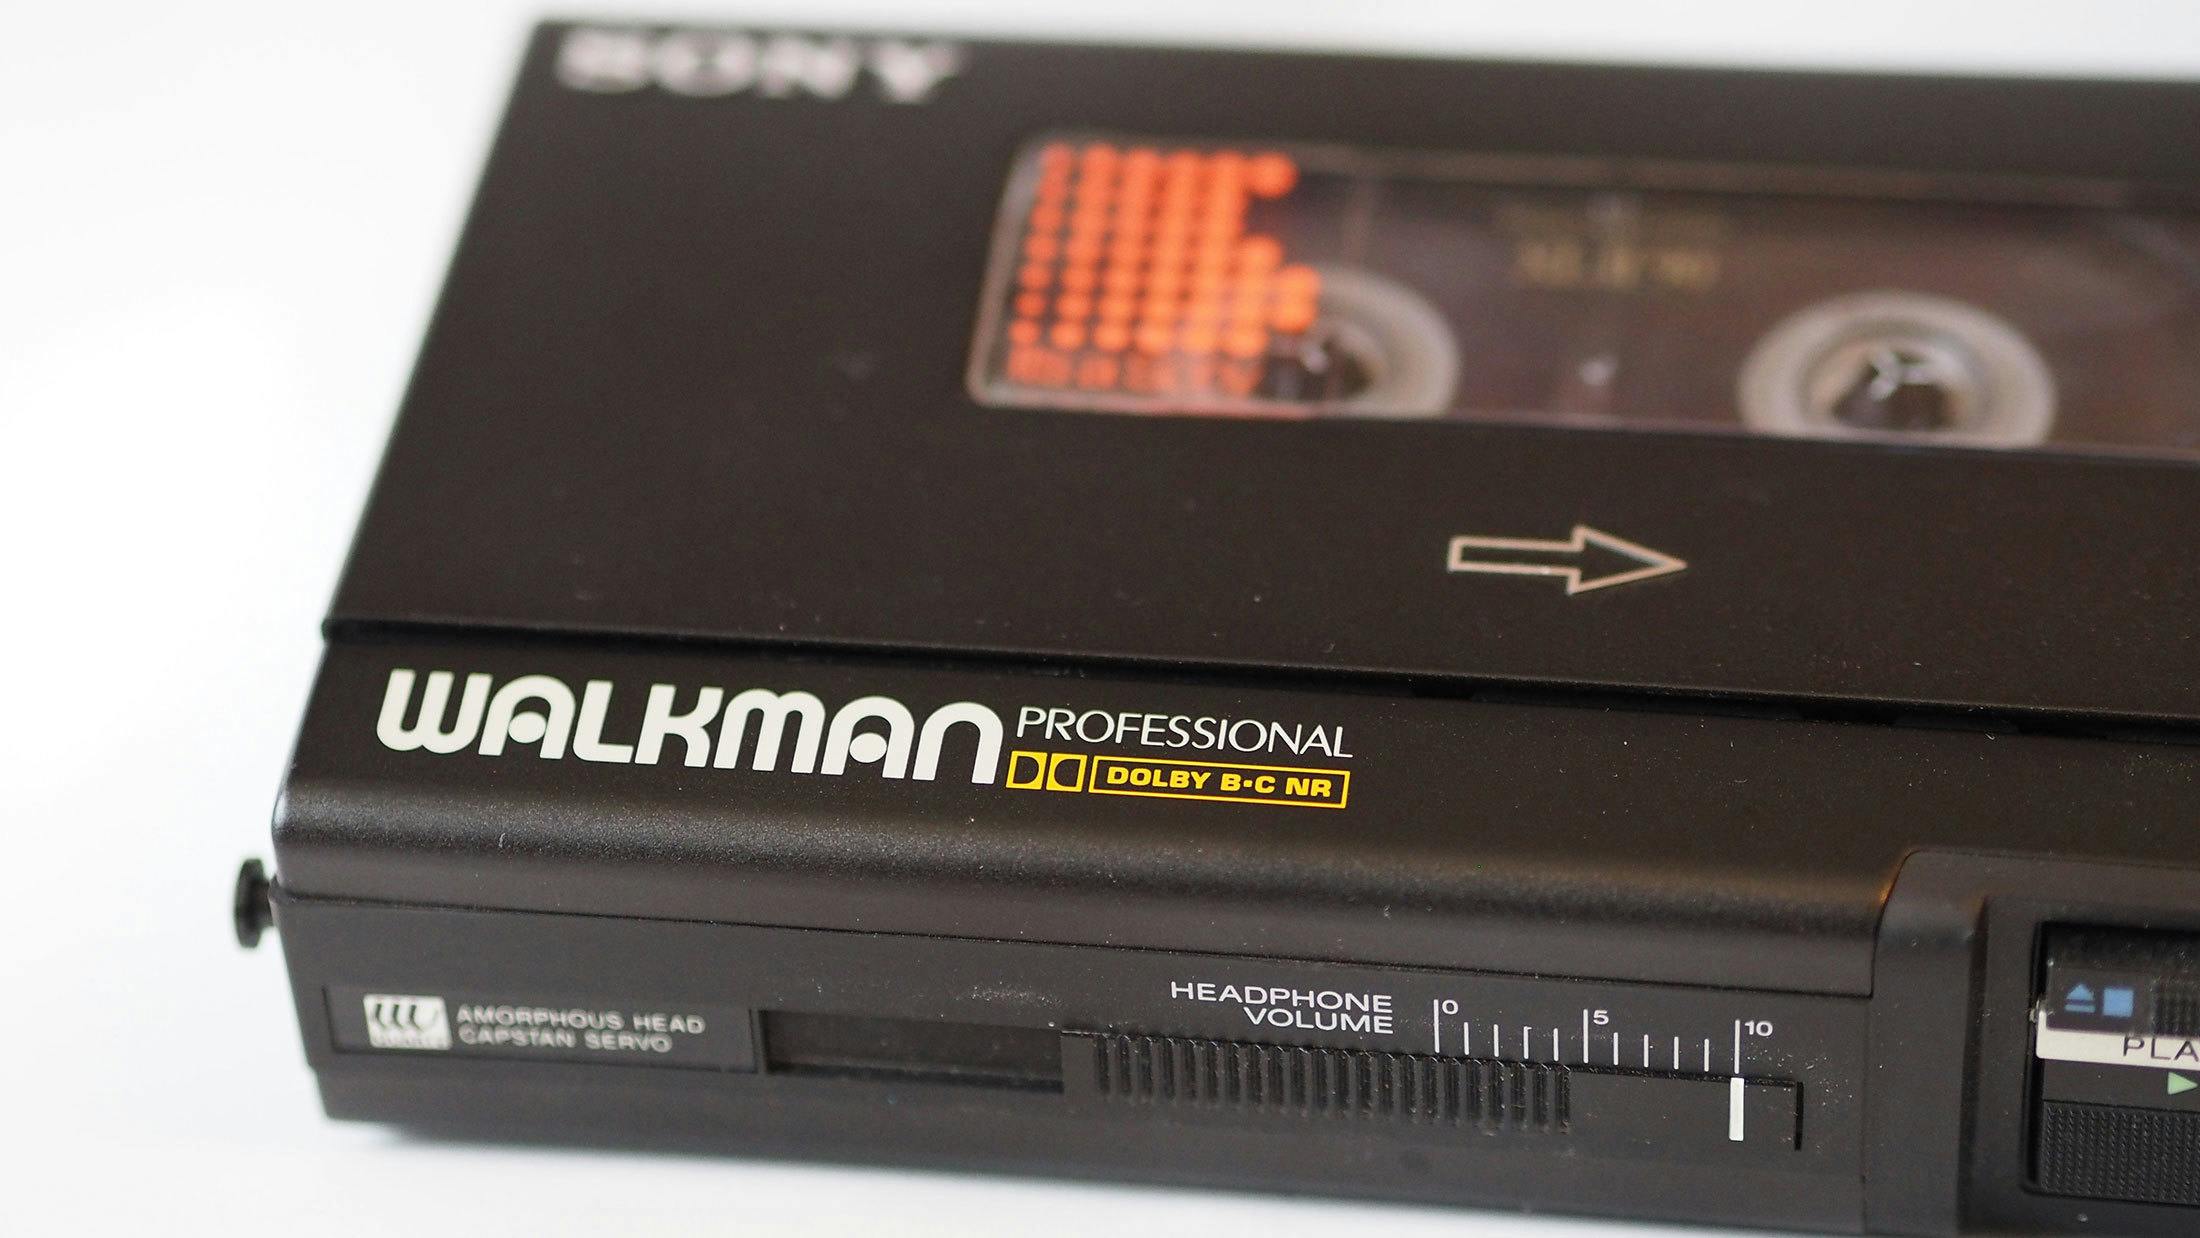 Sony Unveil New Walkman To Mark 40th Anniversary